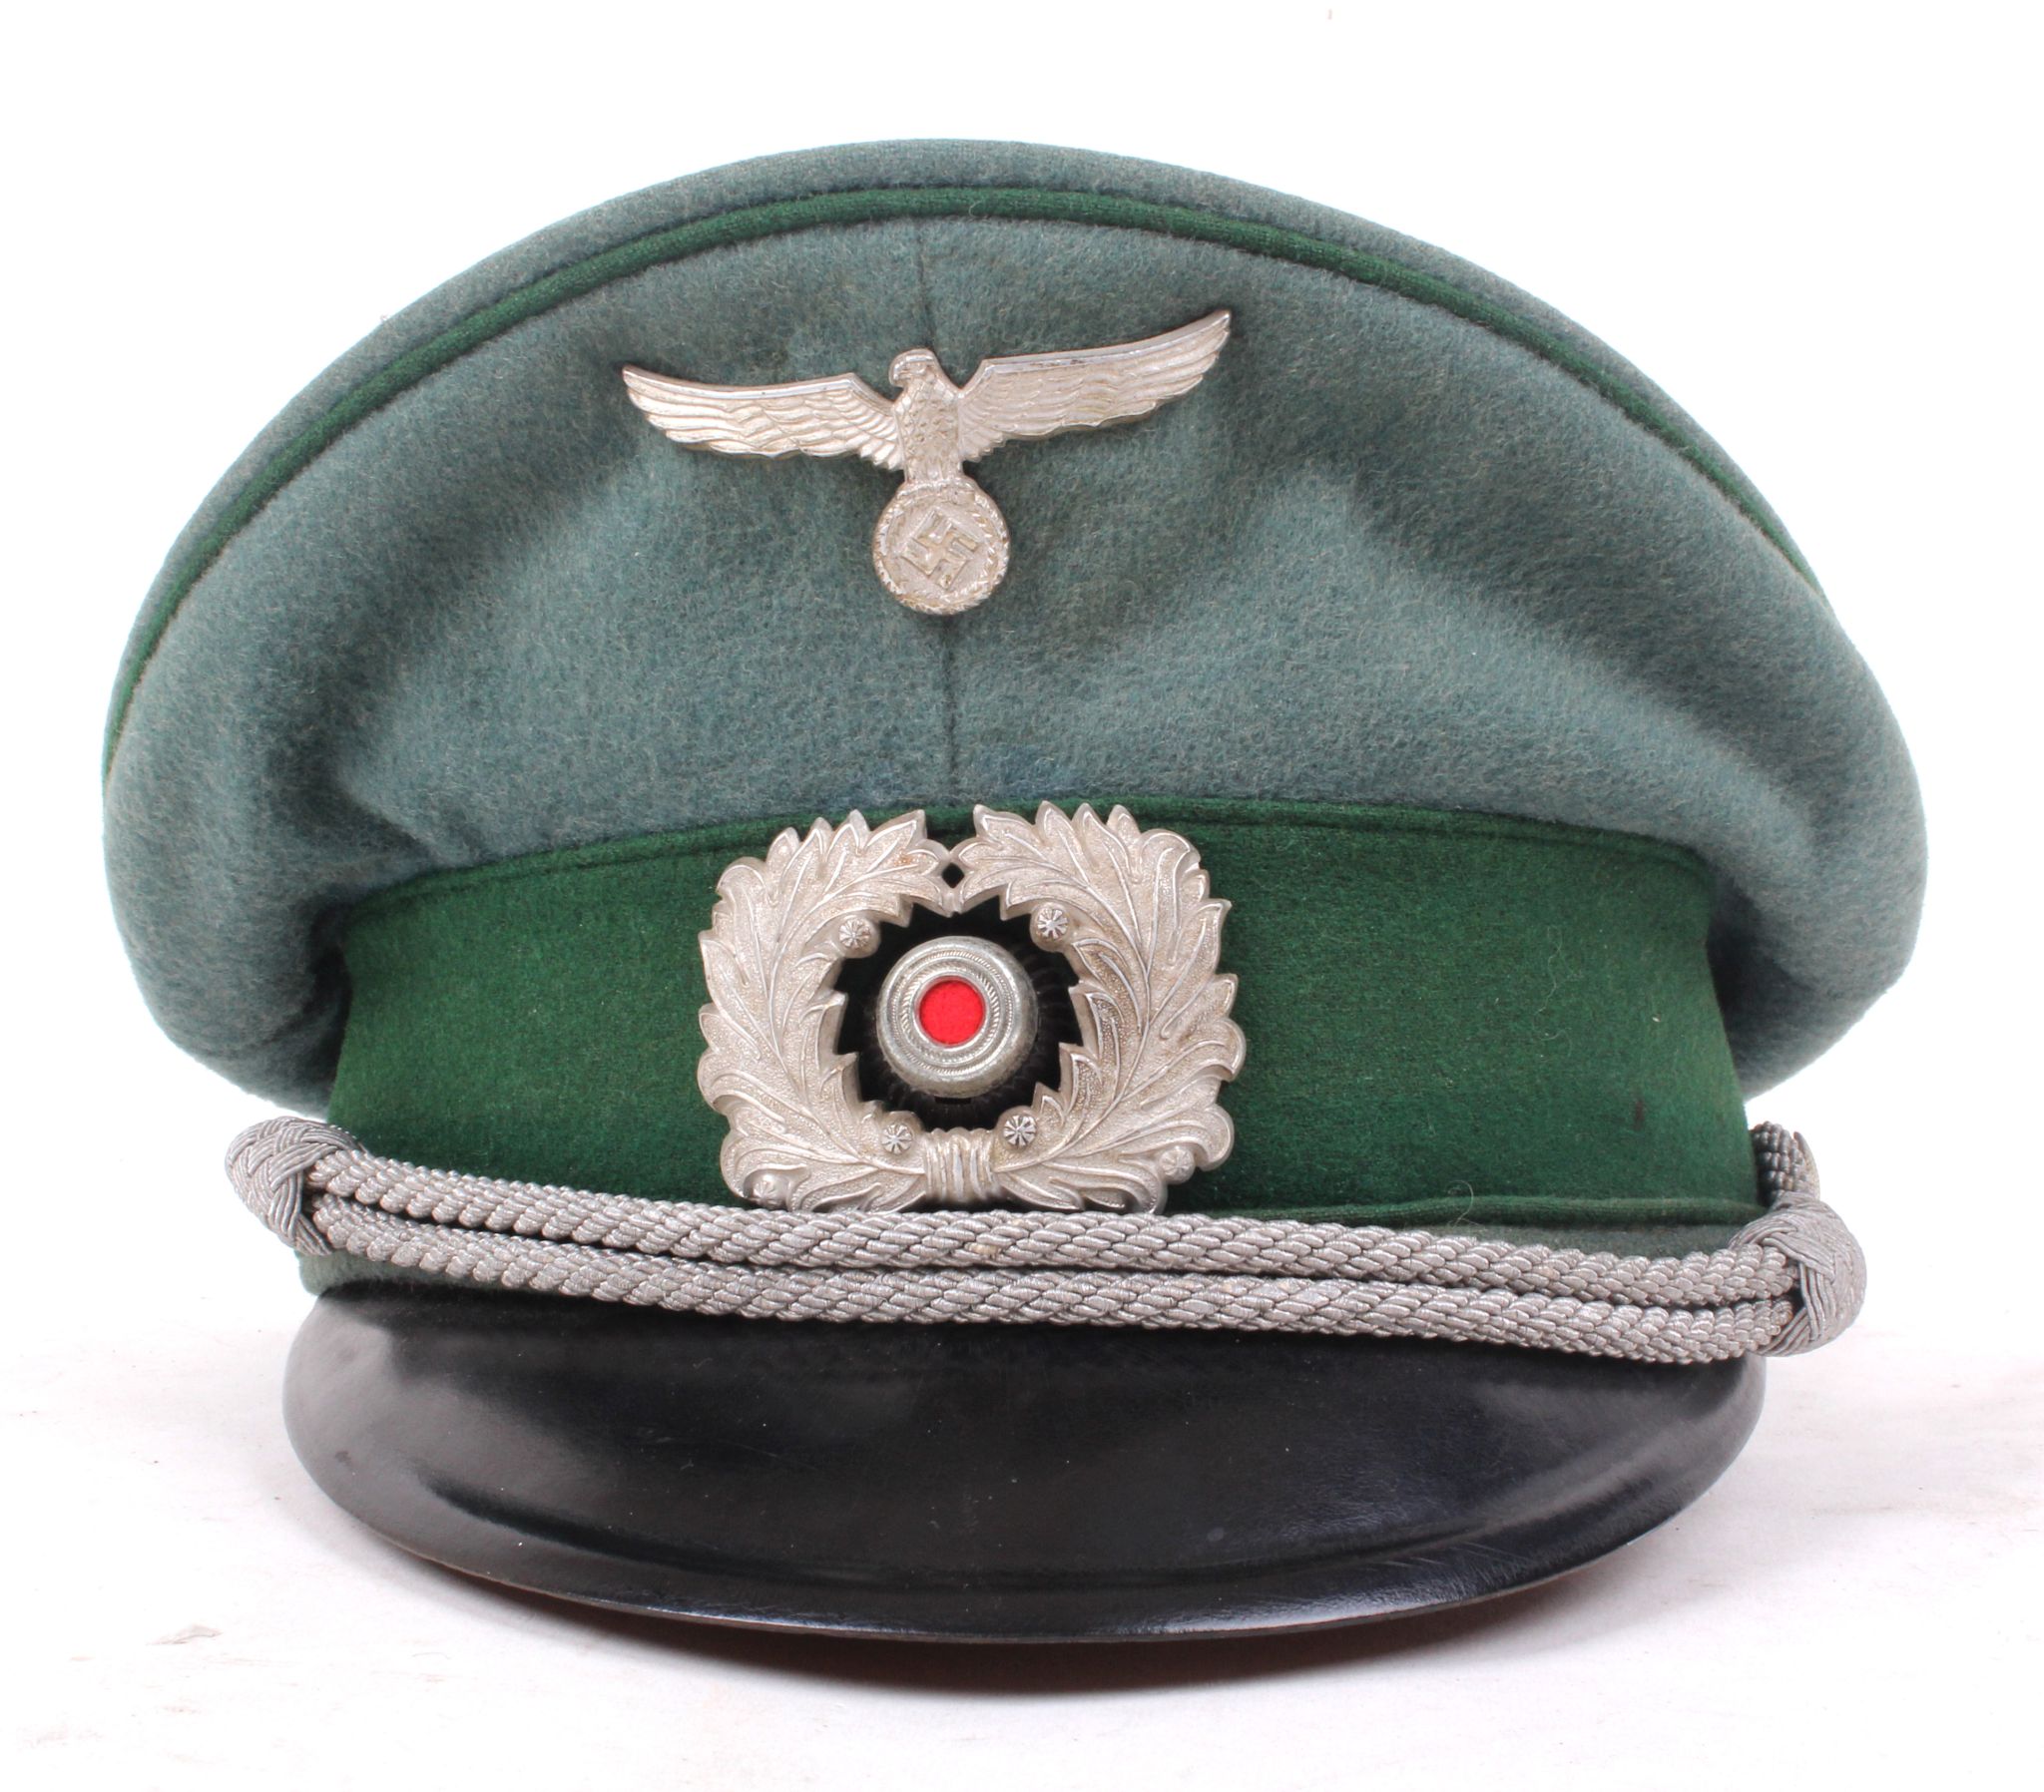 WW2 3rd Reich German Heer army Schirmmutze visor cap, Army Administration Officer / Customs, eagle